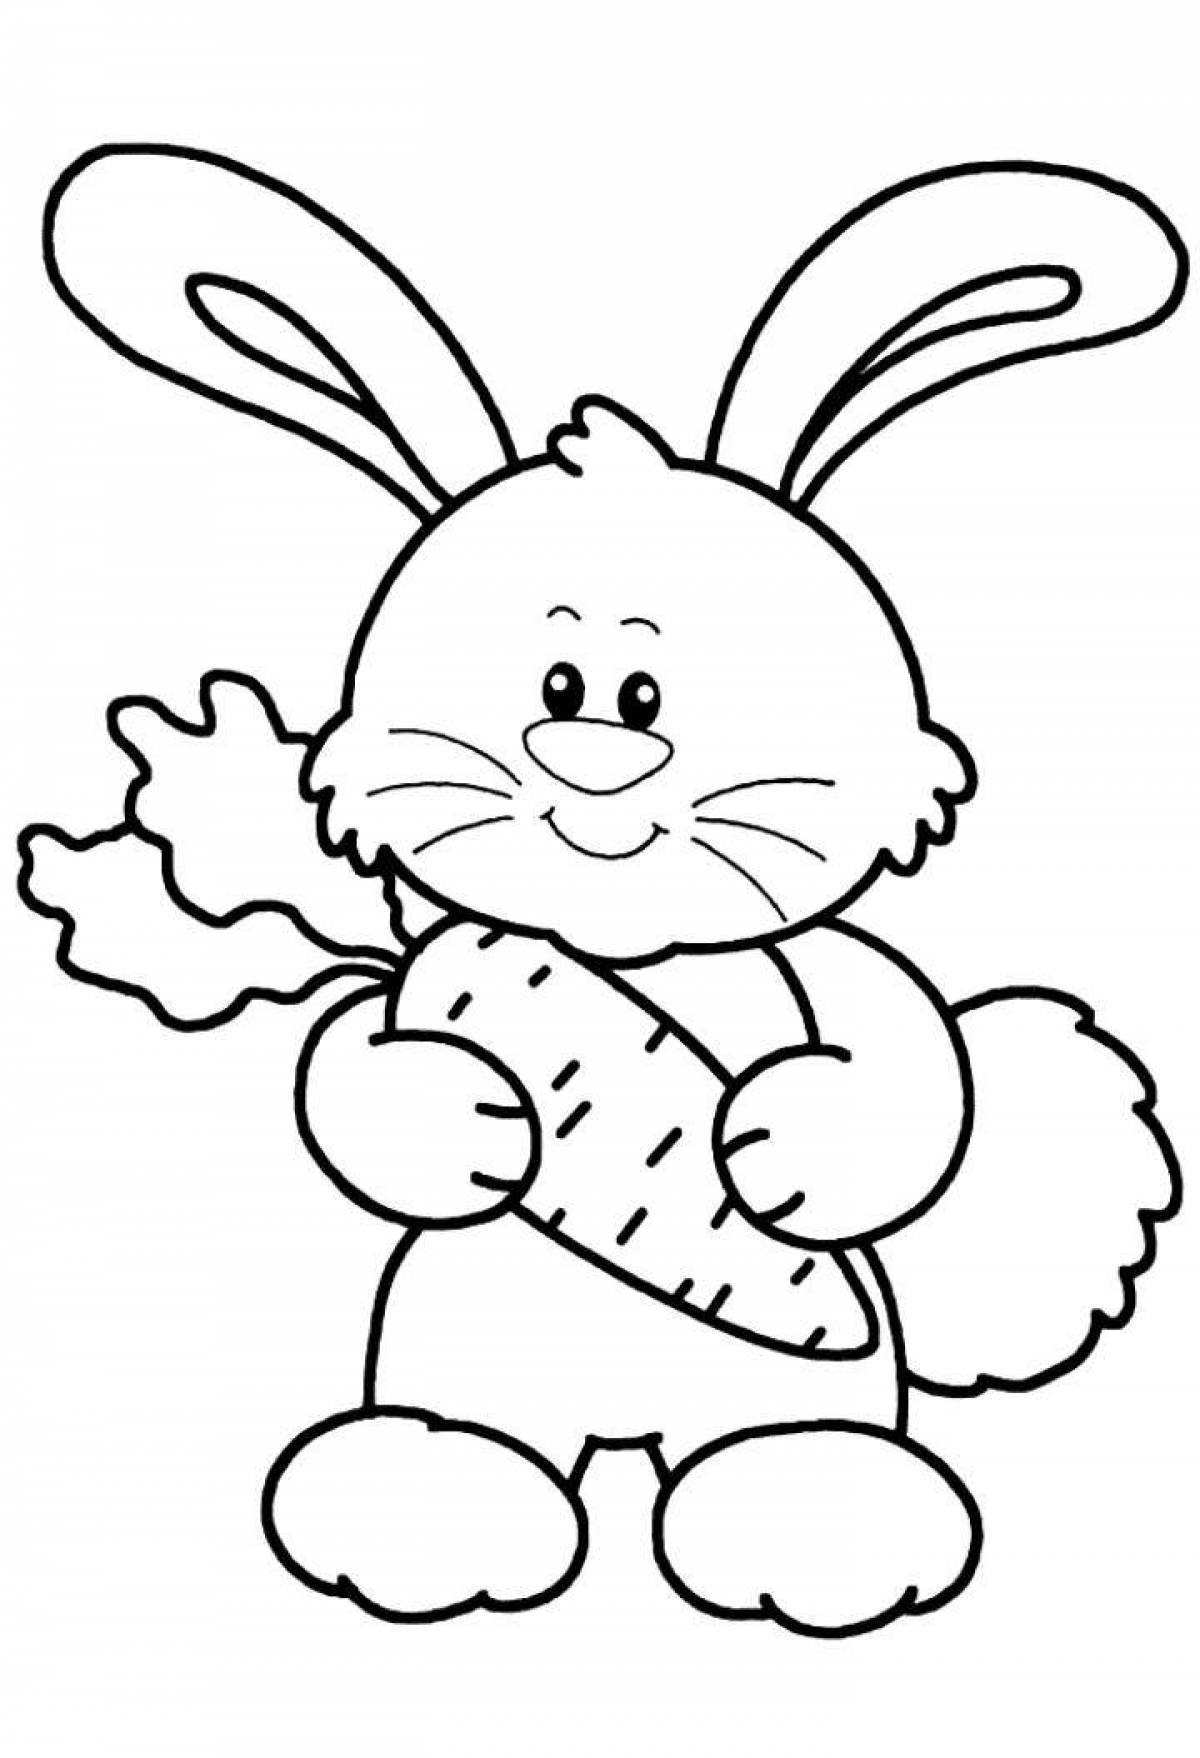 Snuggly coloring page bunny для детей